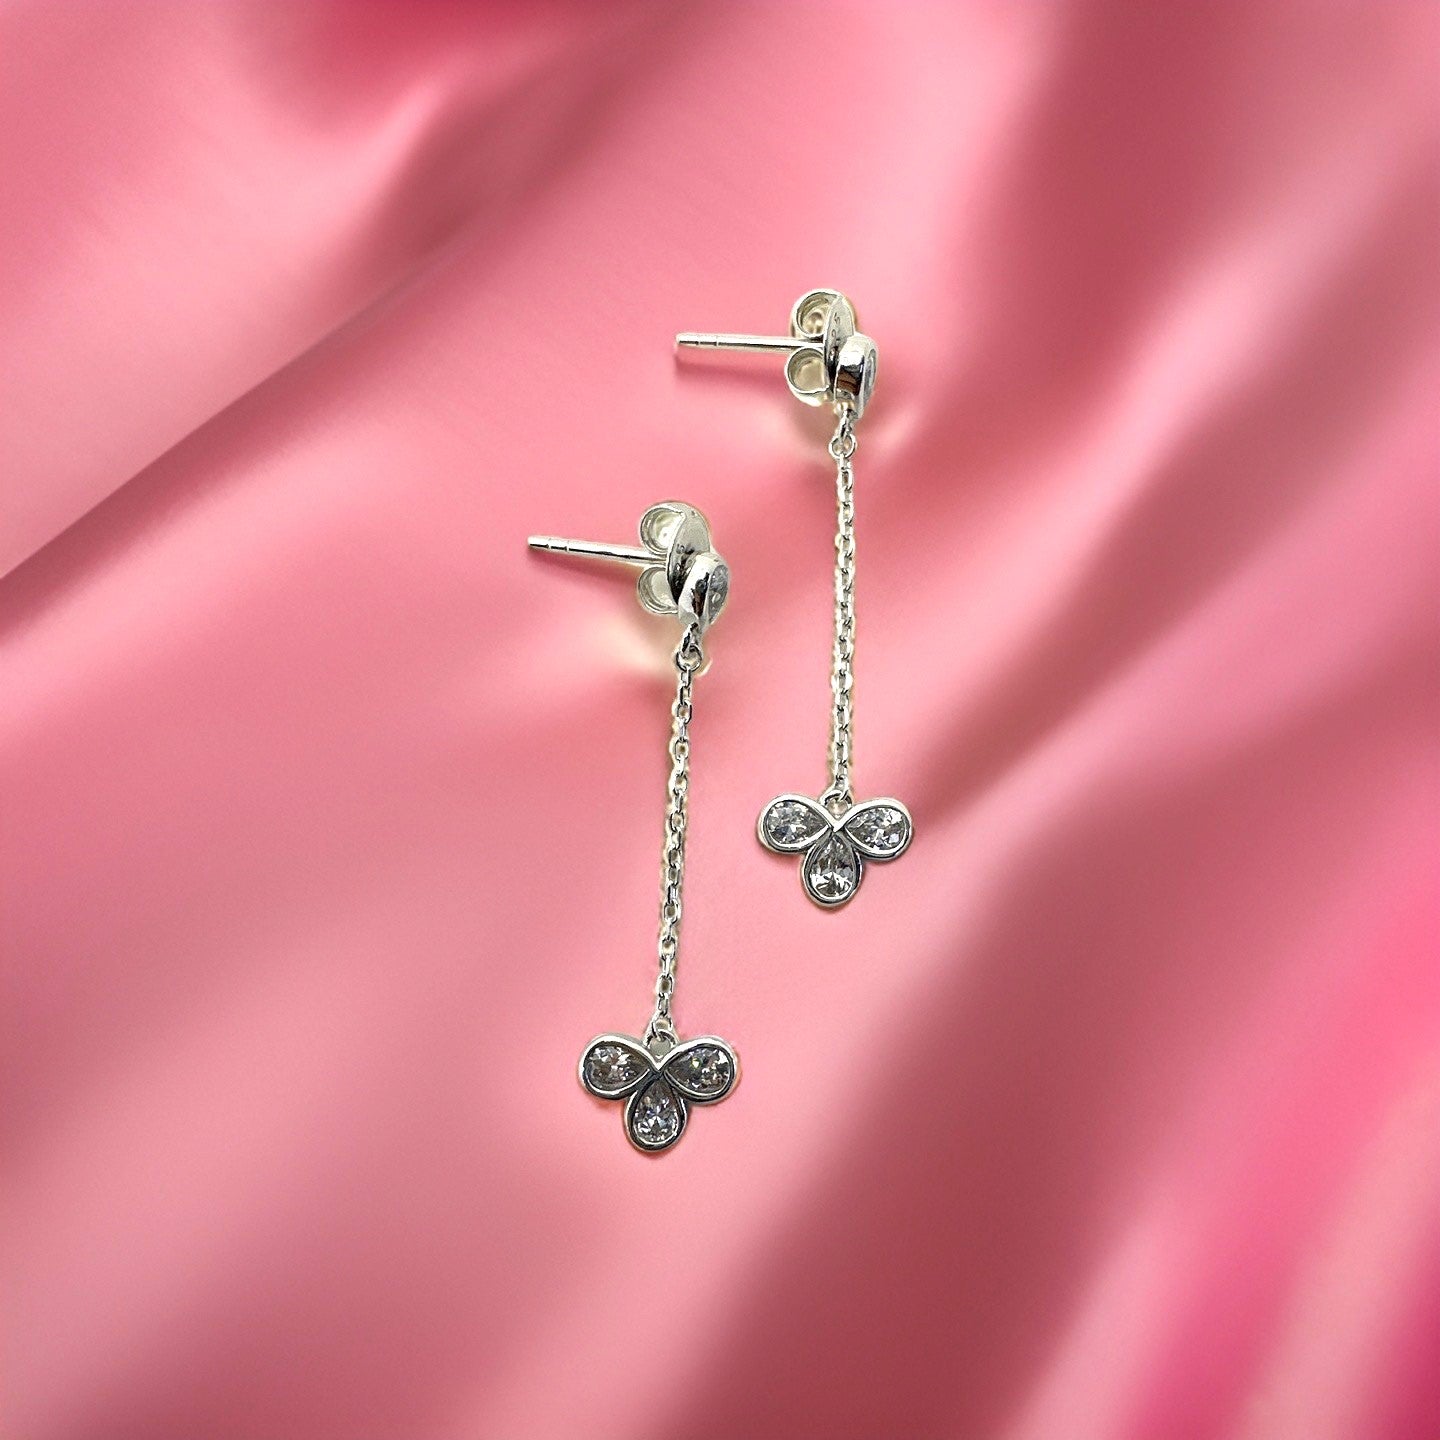 Elegant Earrings in Sterling Silver and White Zircon Stones